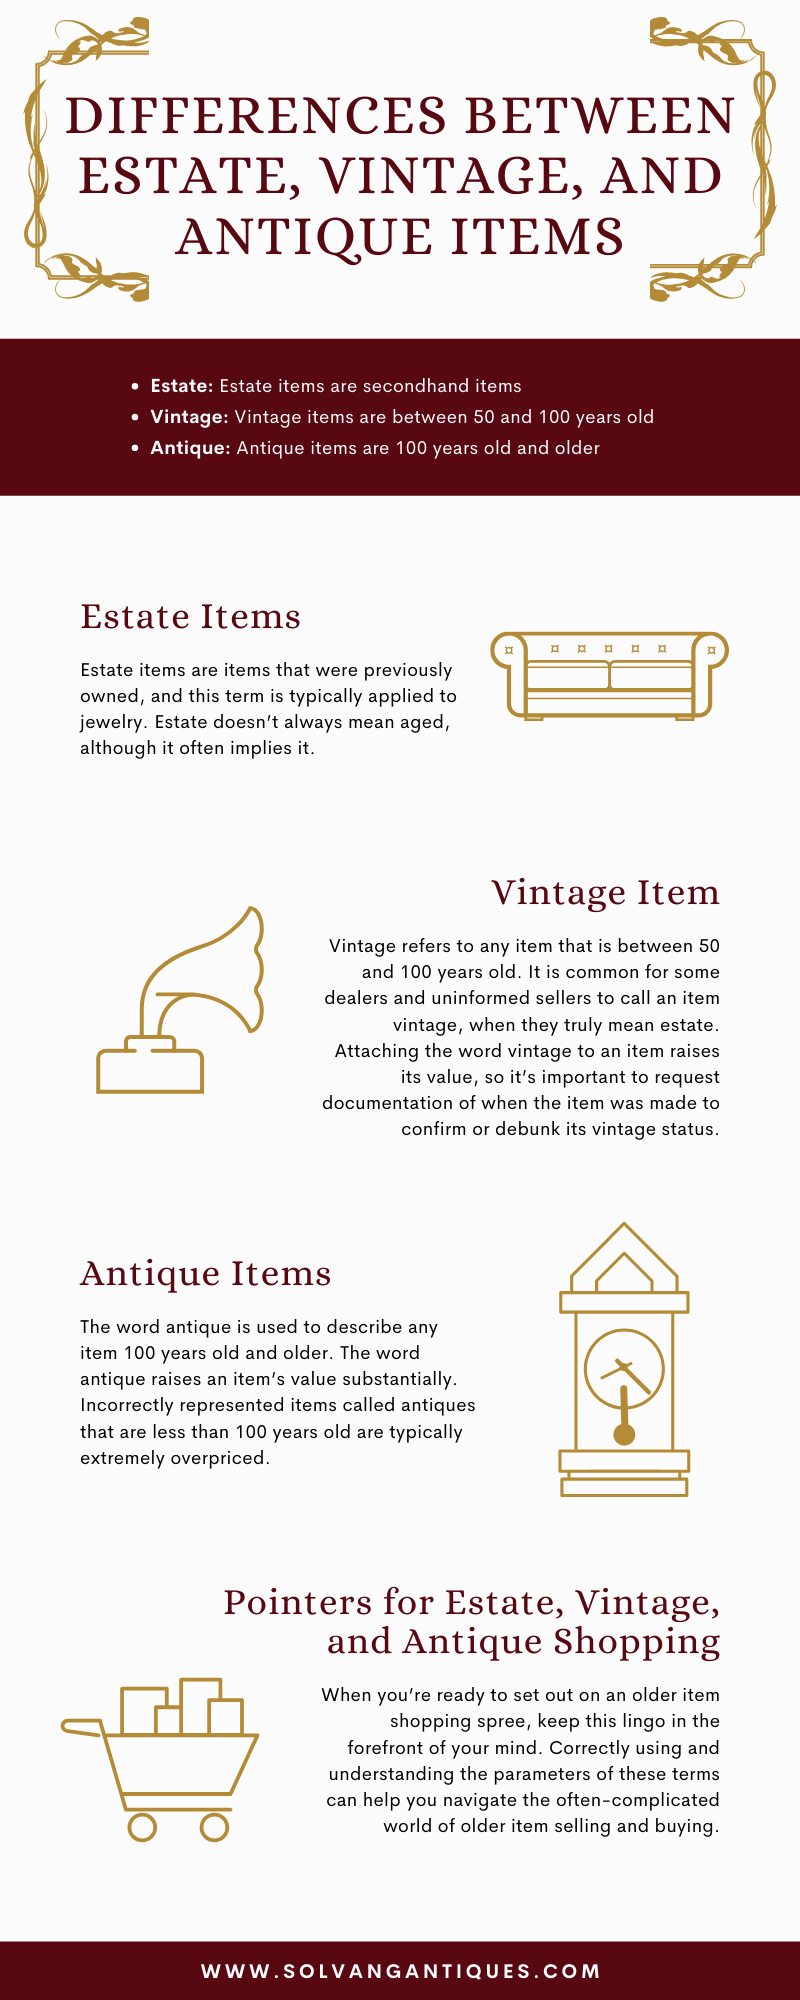 Estate Vintage Antiques Infographic